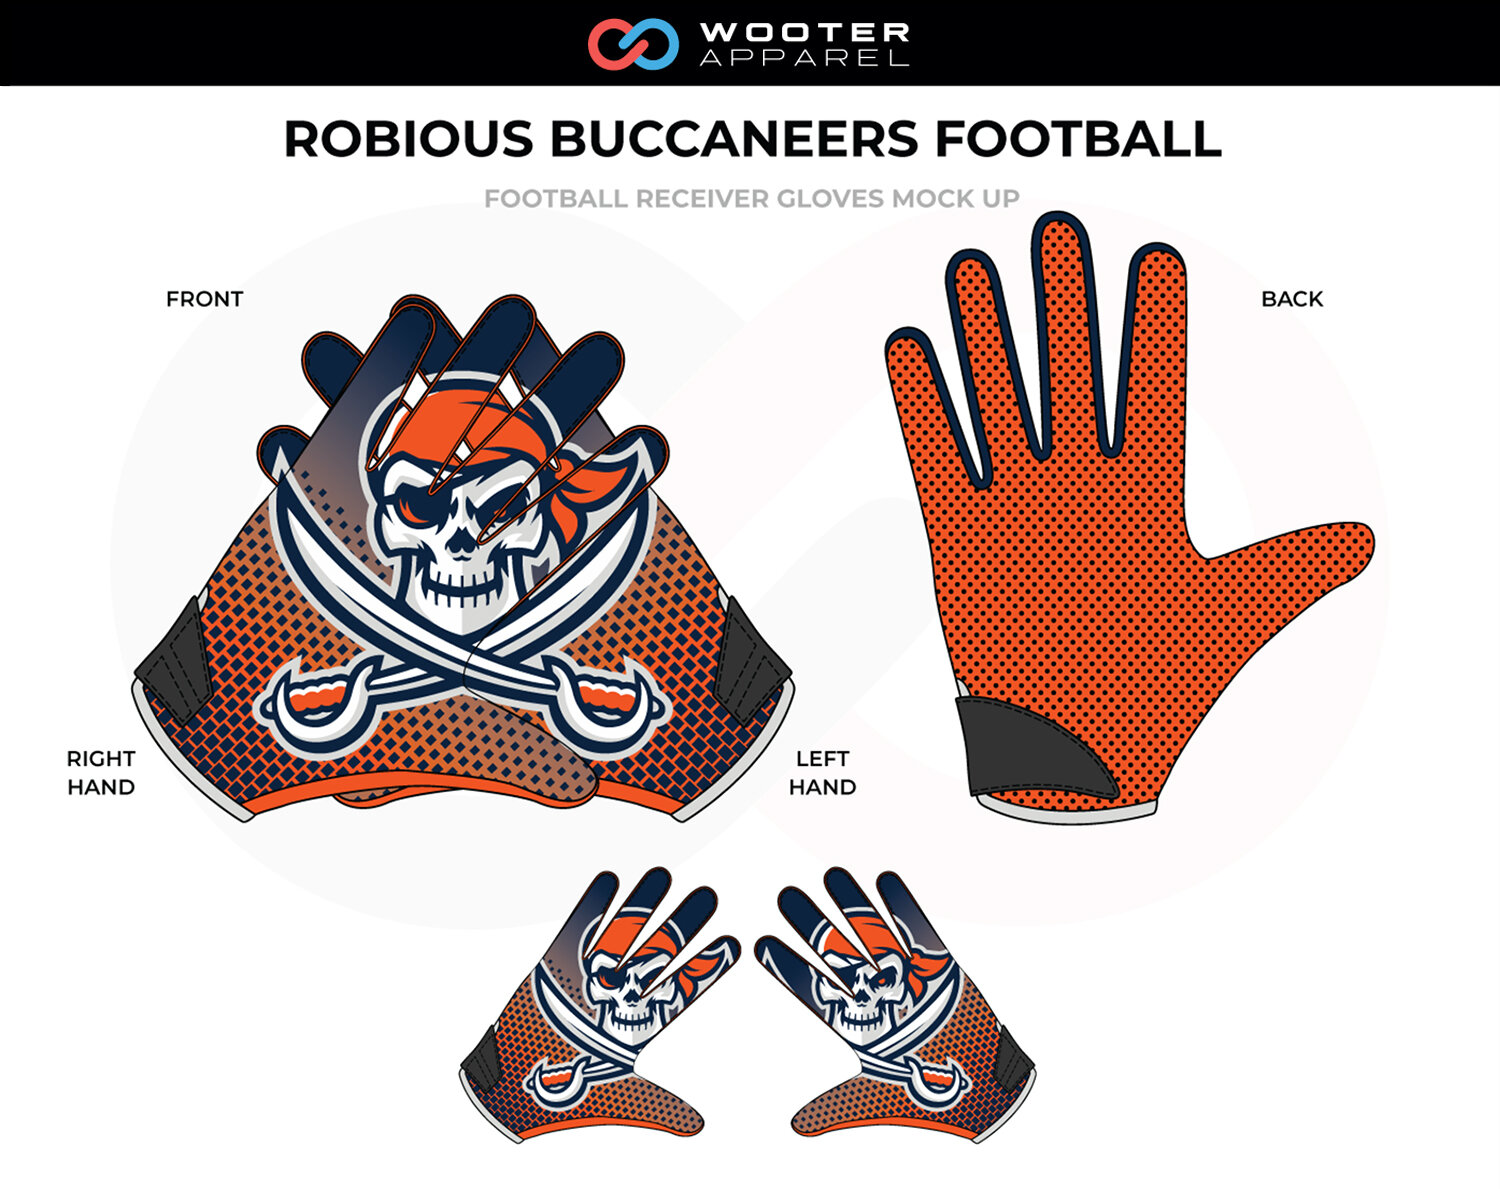 Robious Buccaneers Football - Pirate Custom Football Gloves Skull and Cross Bones Orange Purple Navy